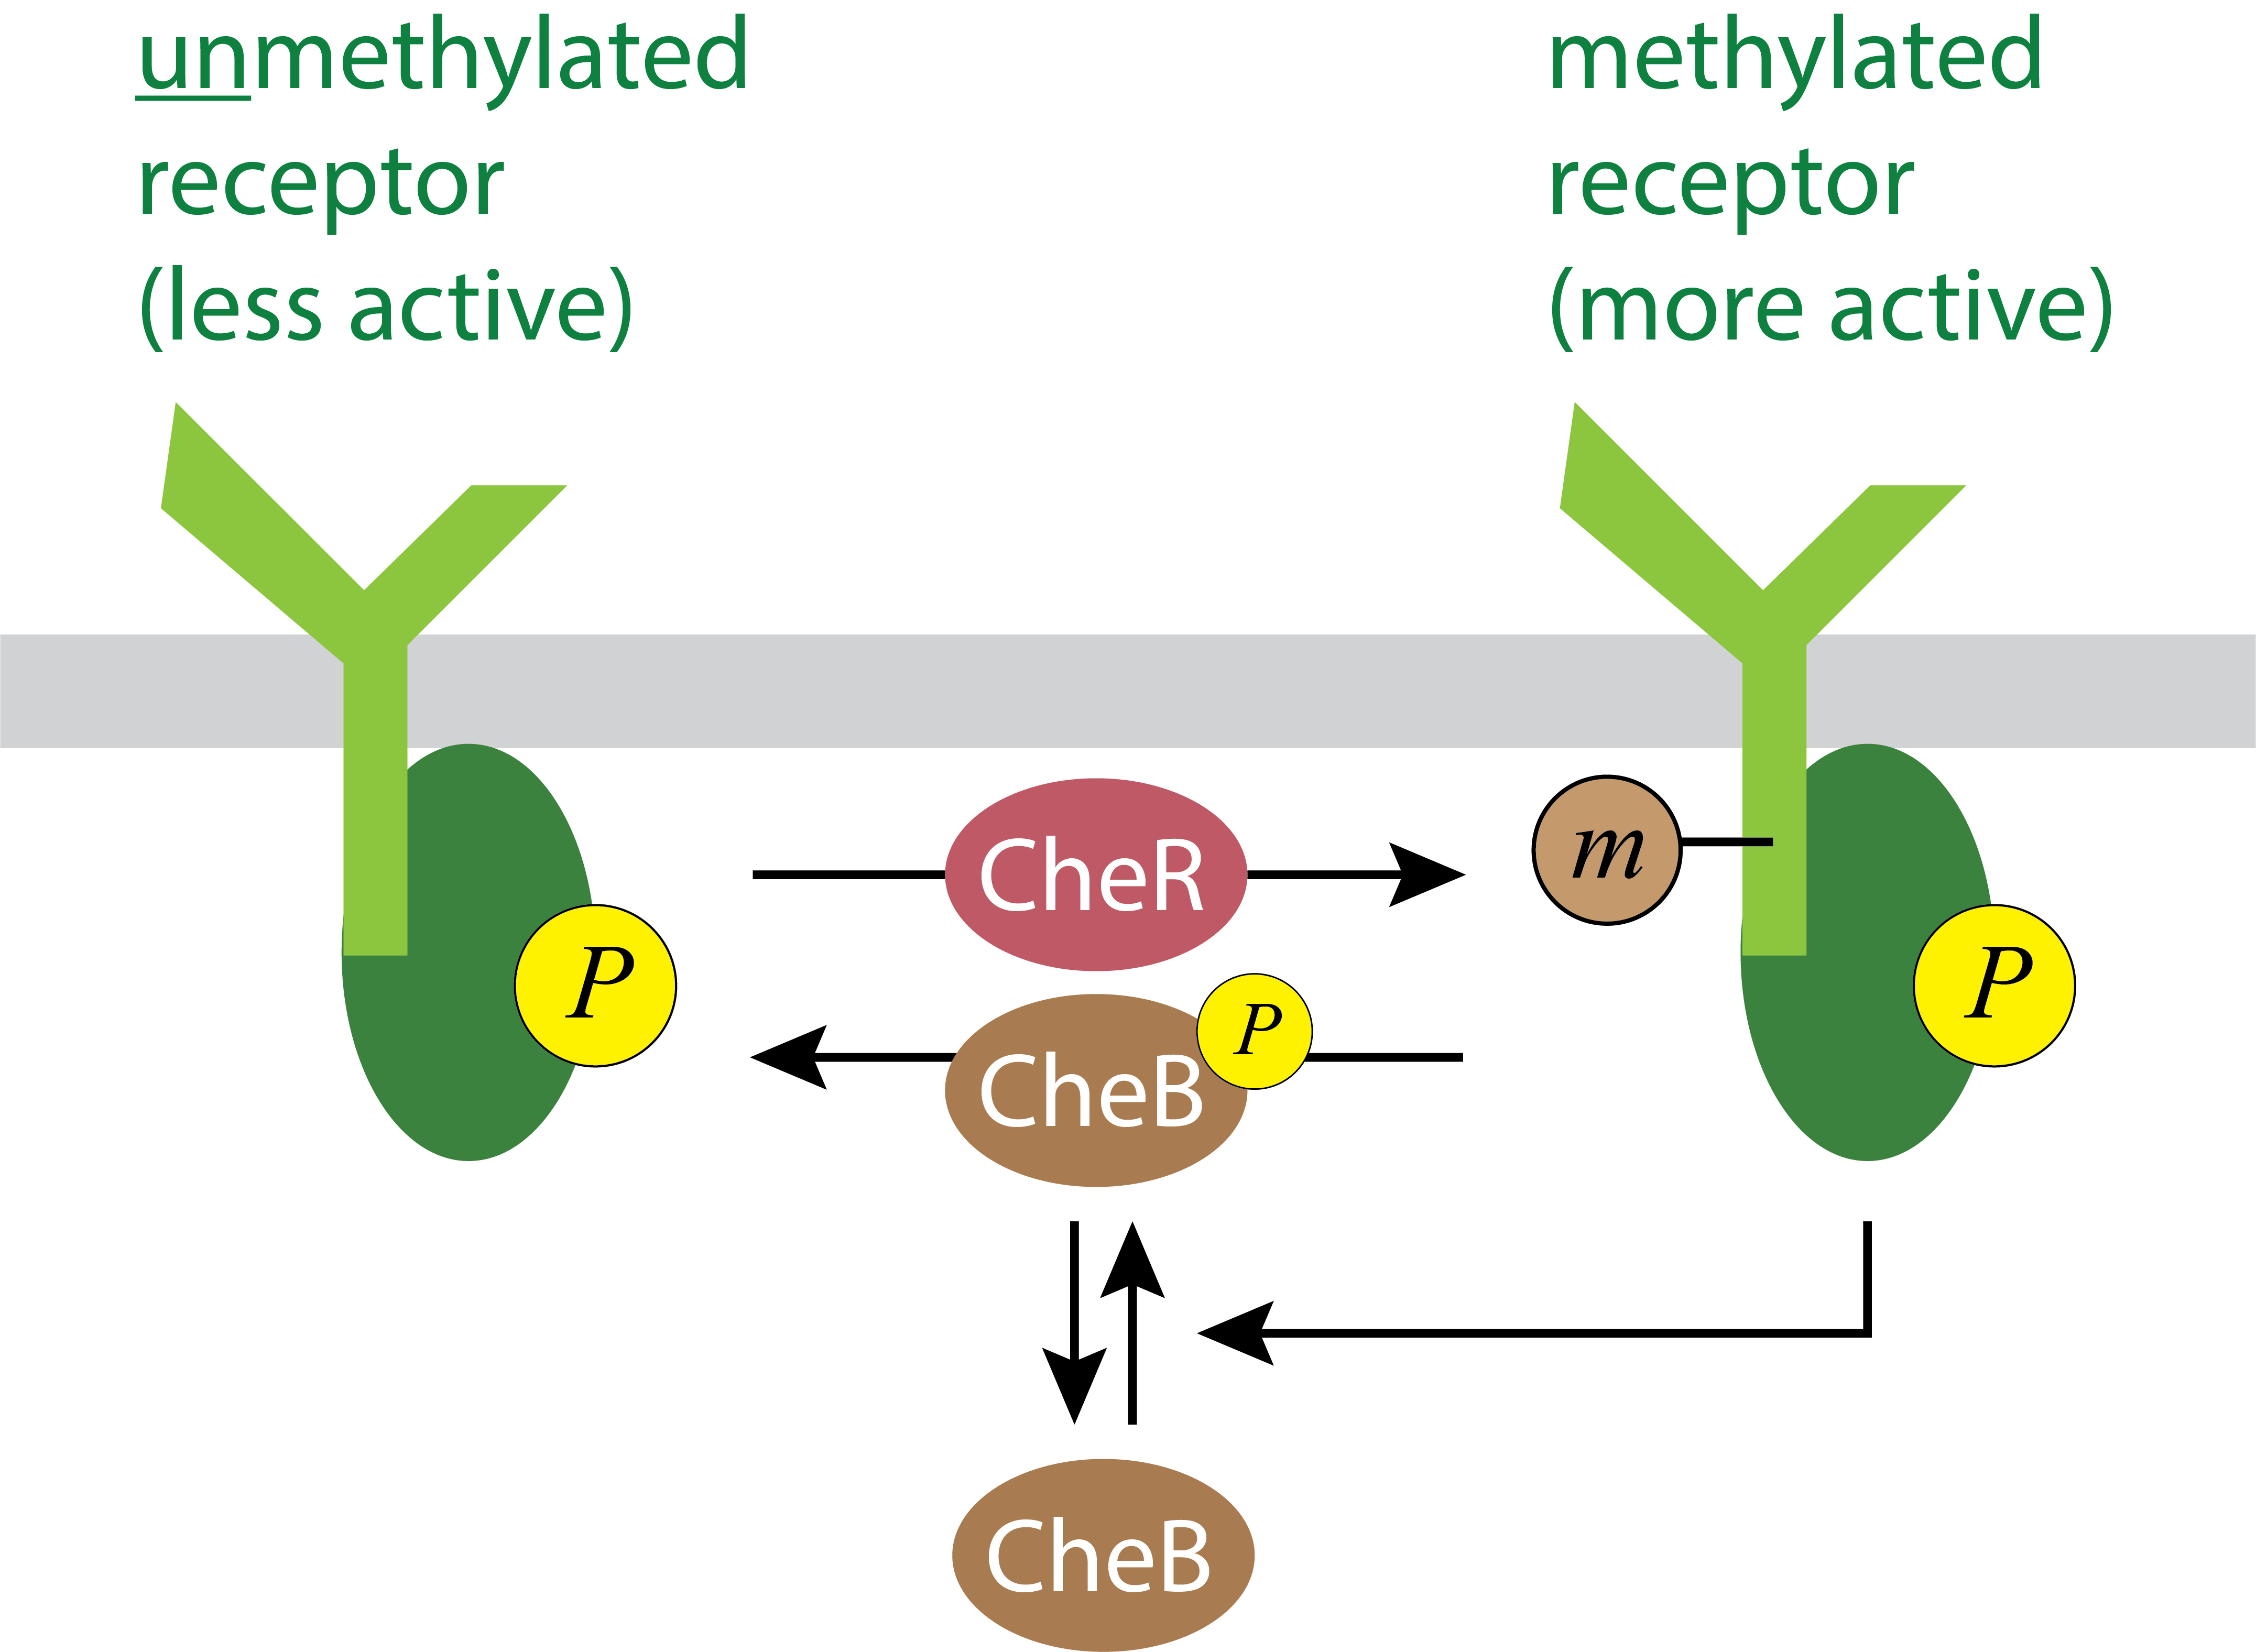 chemotaxis-methylation